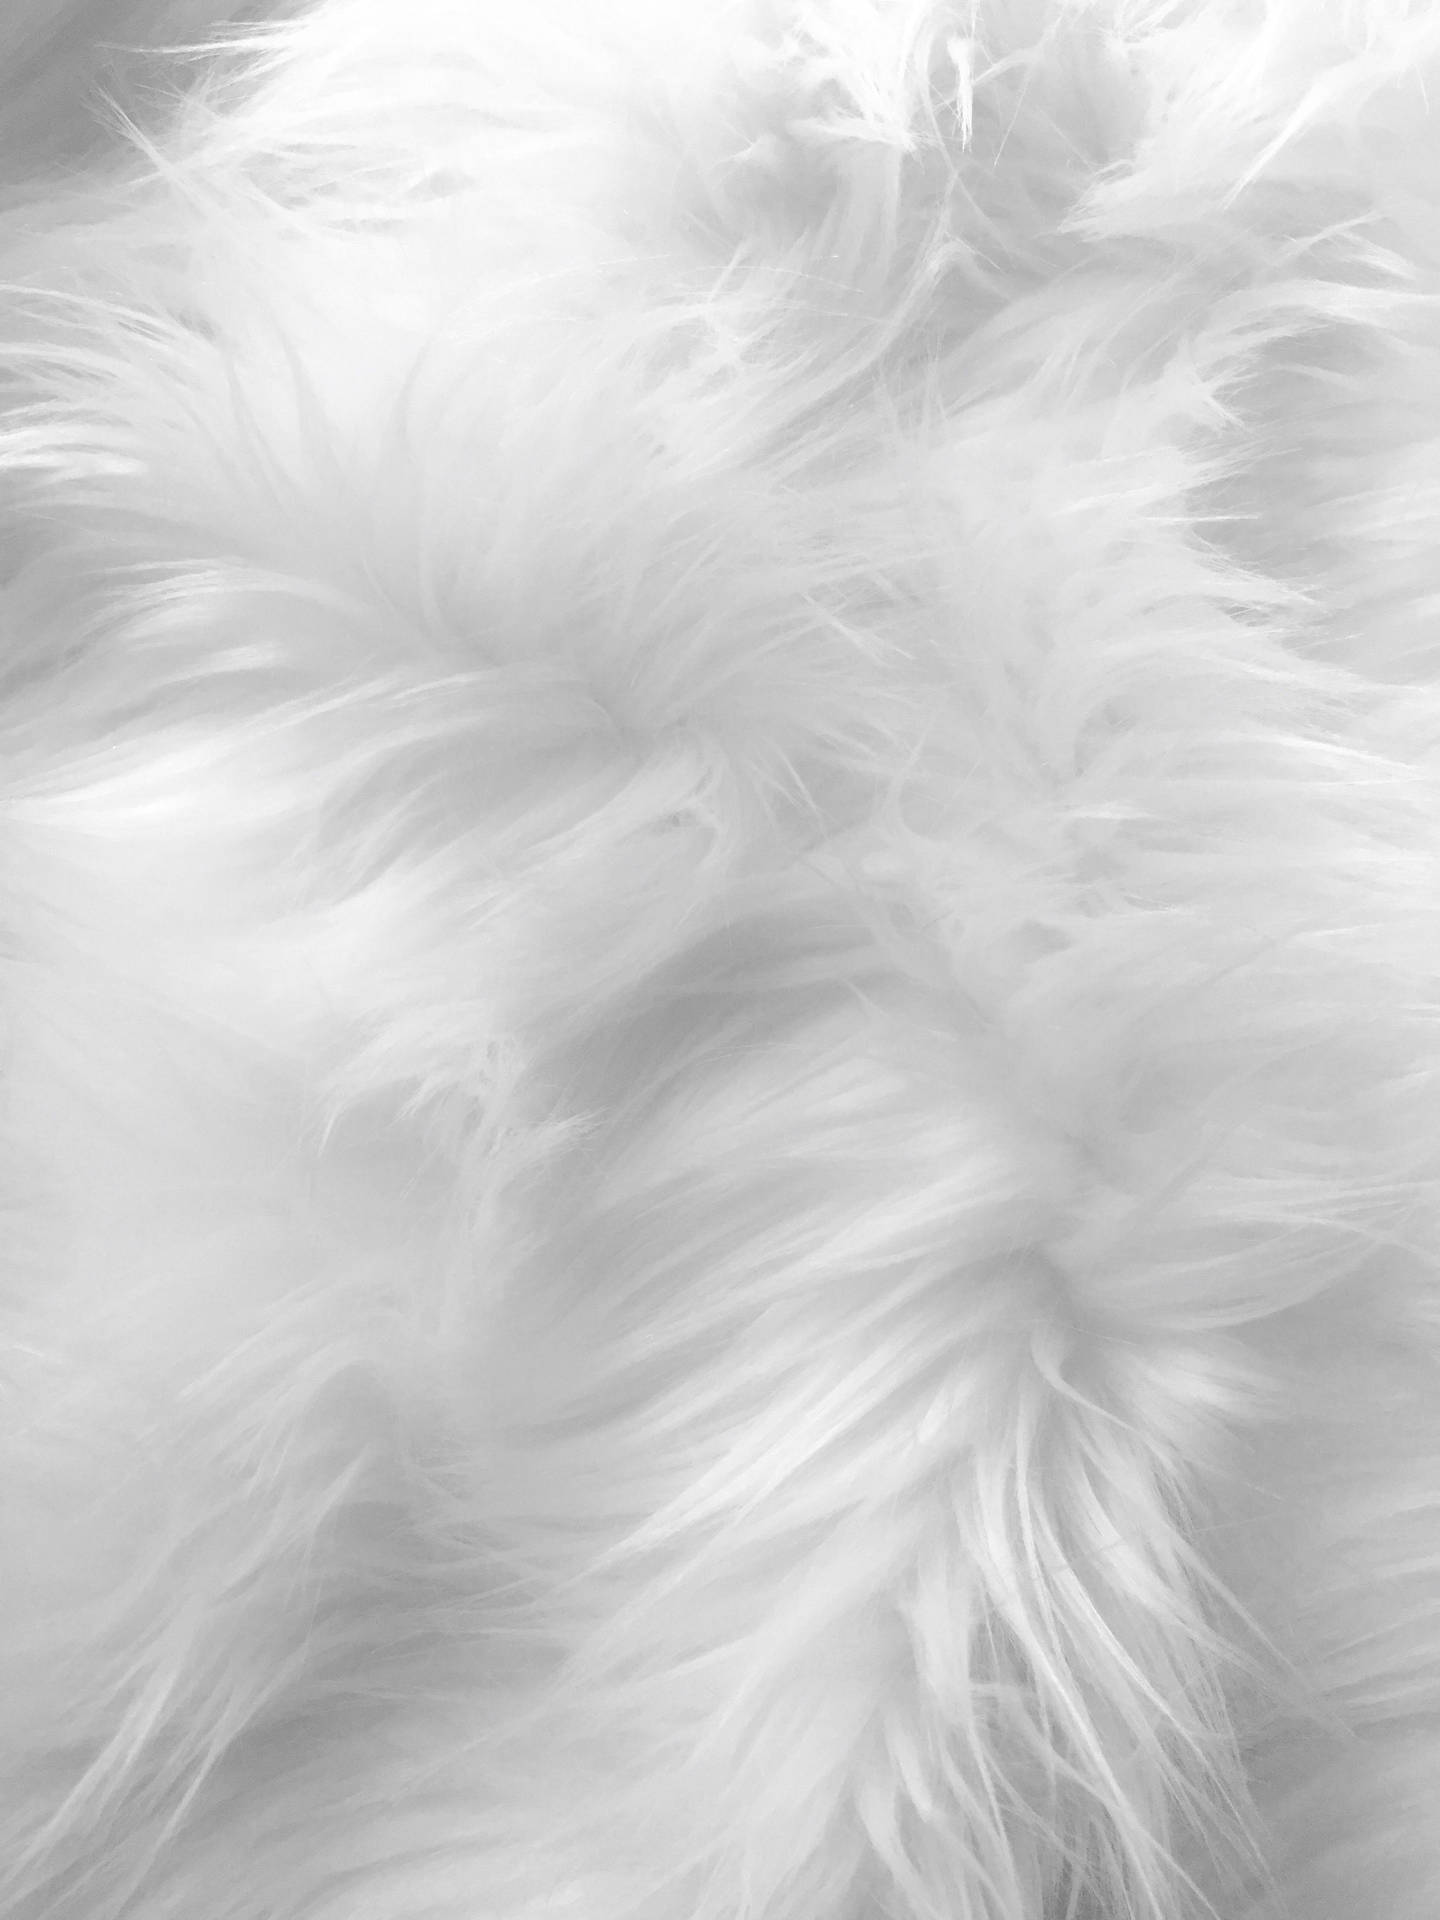 Soft White Animal Fur Wallpaper